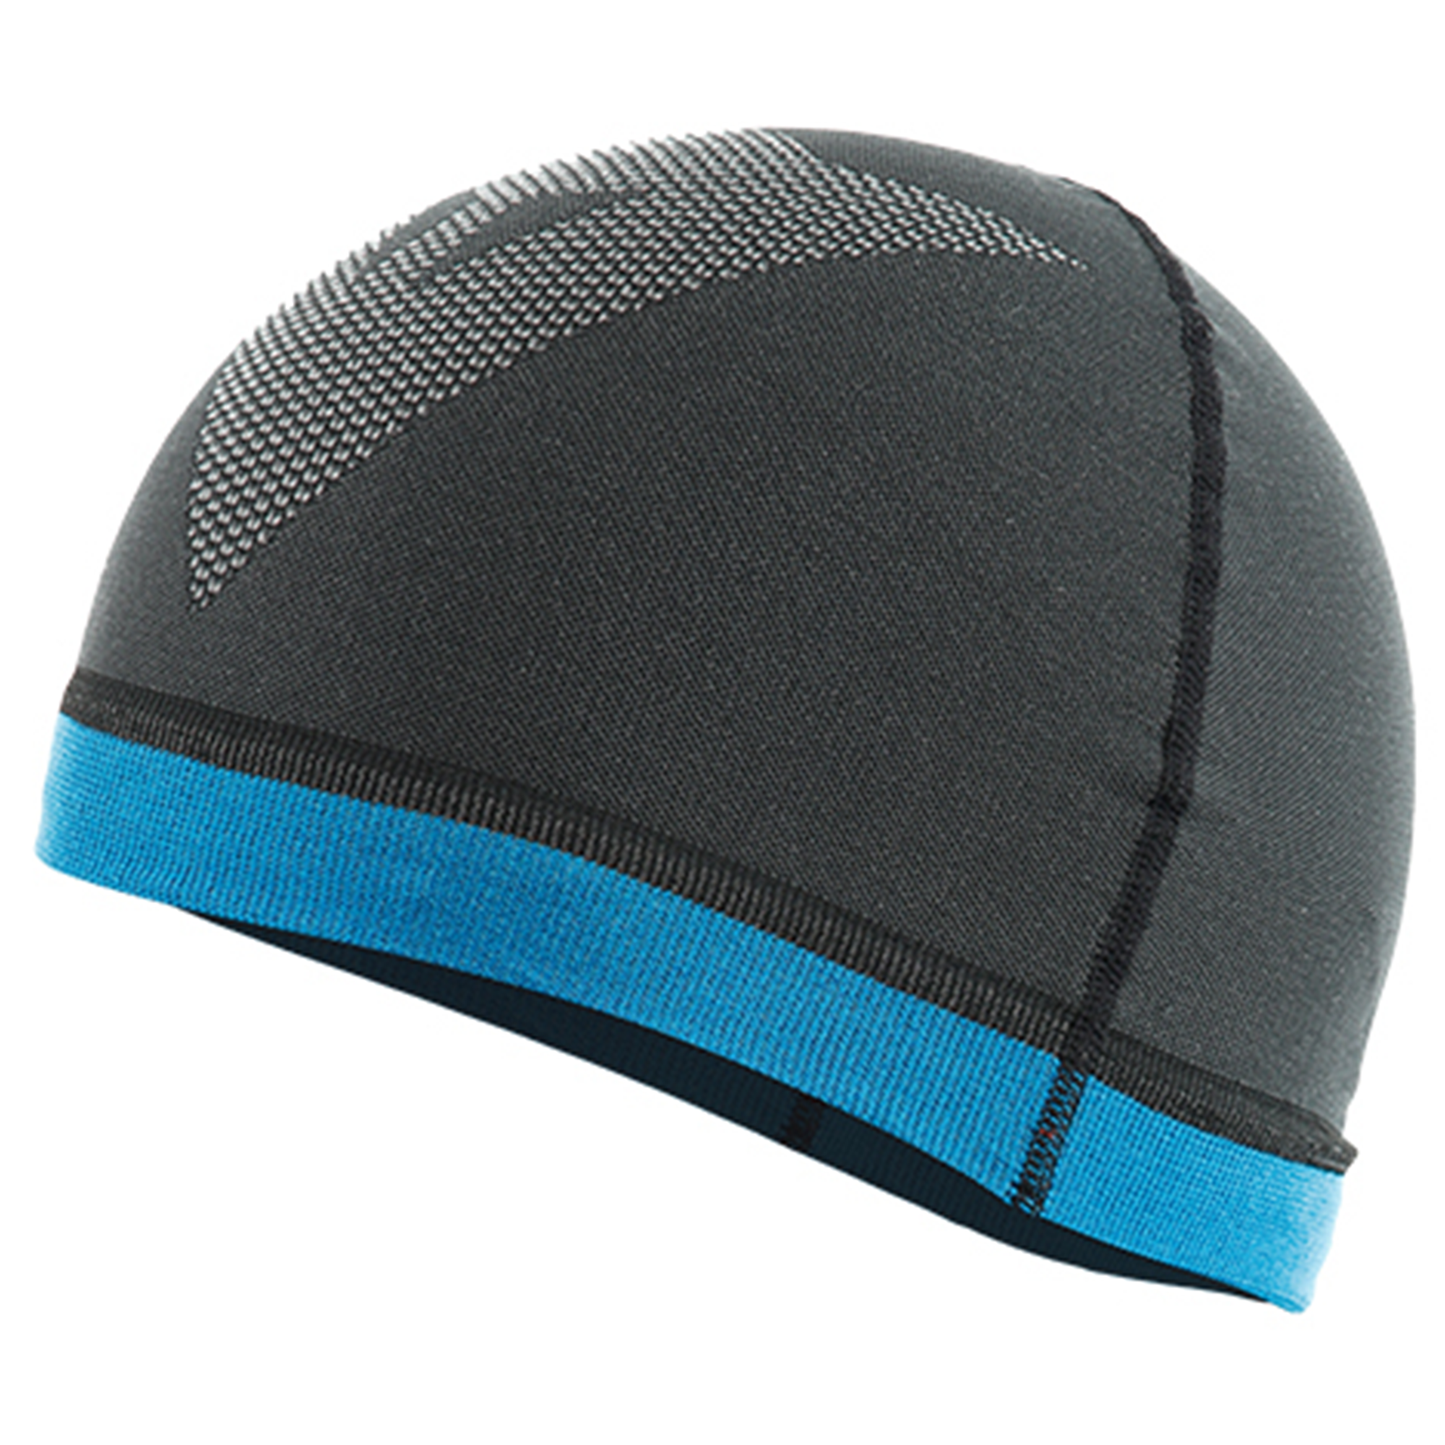 Dainese Dry Cap - Black/Blue (607)